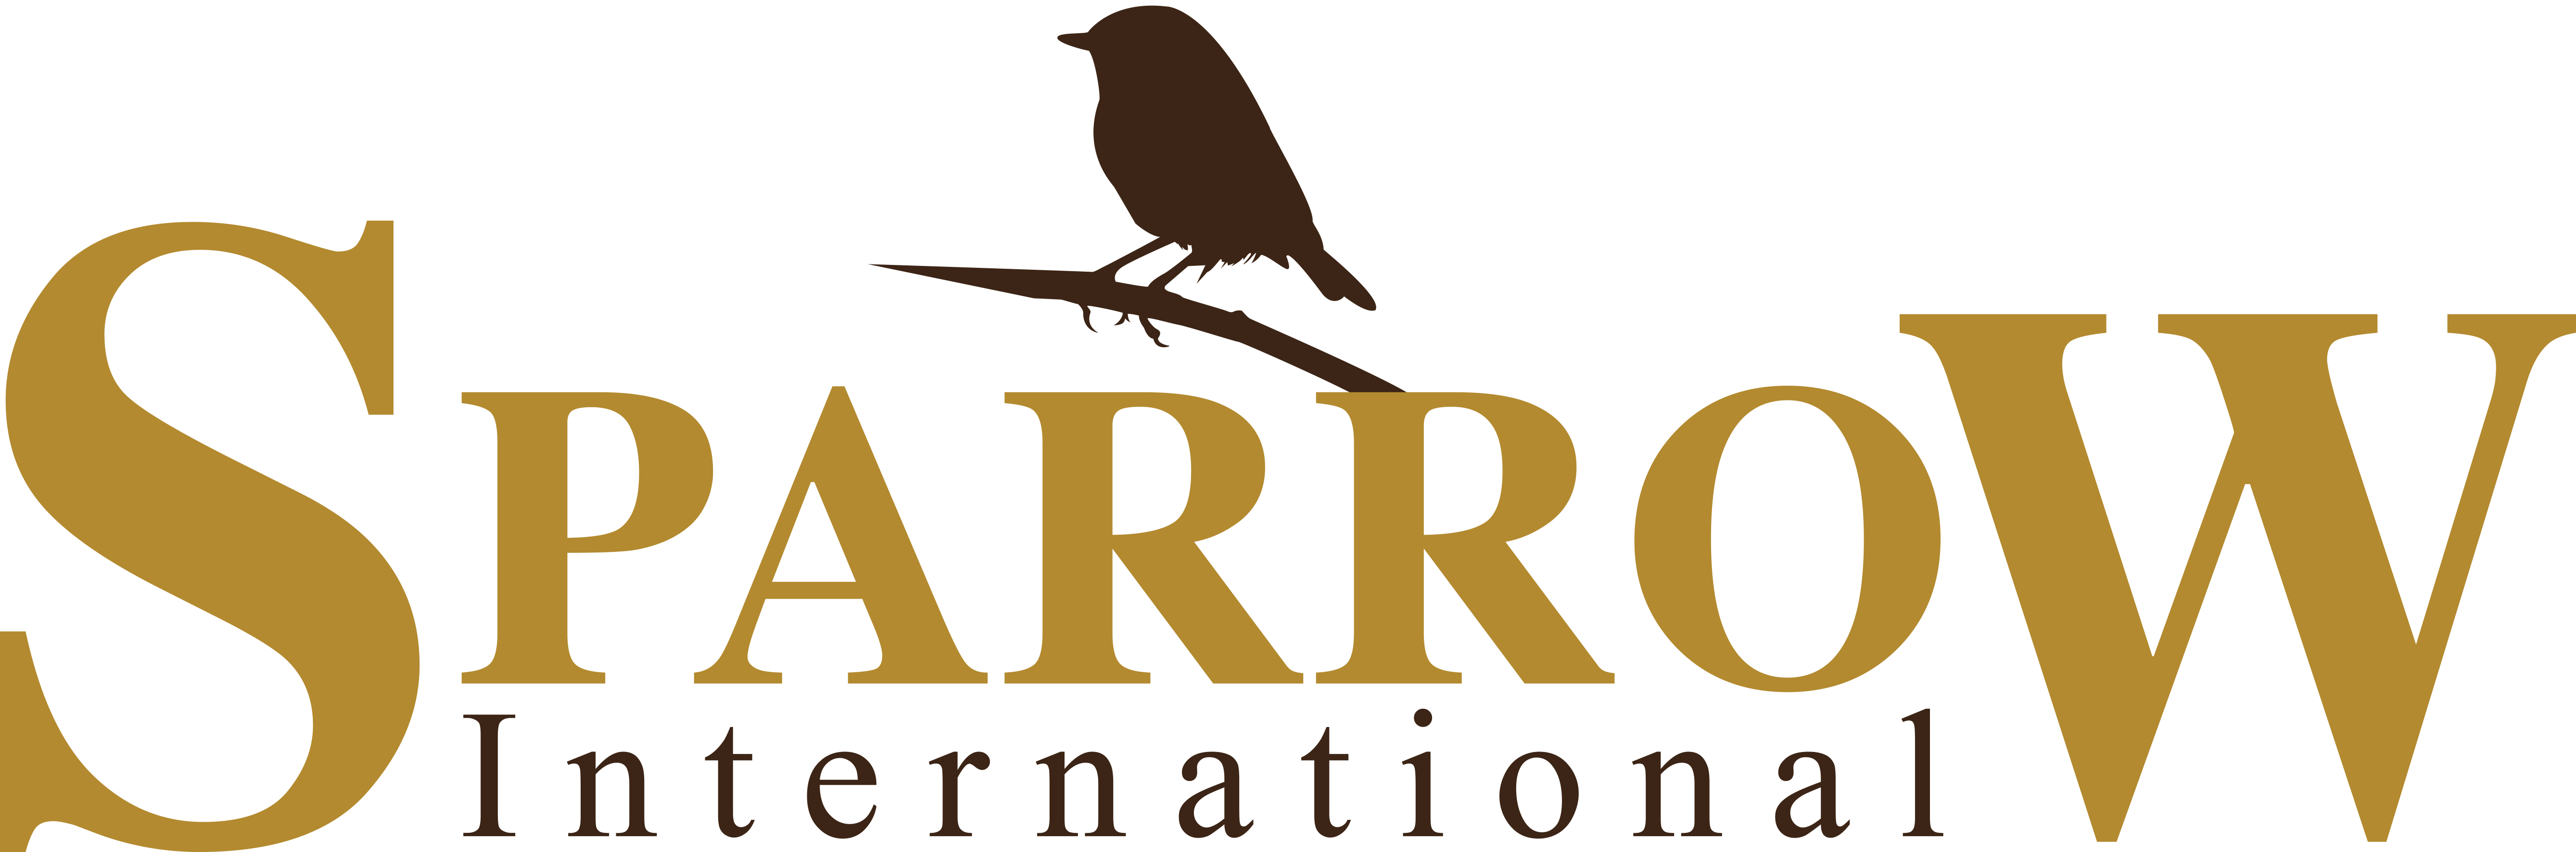 Erremme - sparrow international coffee machine supplier in Dubai